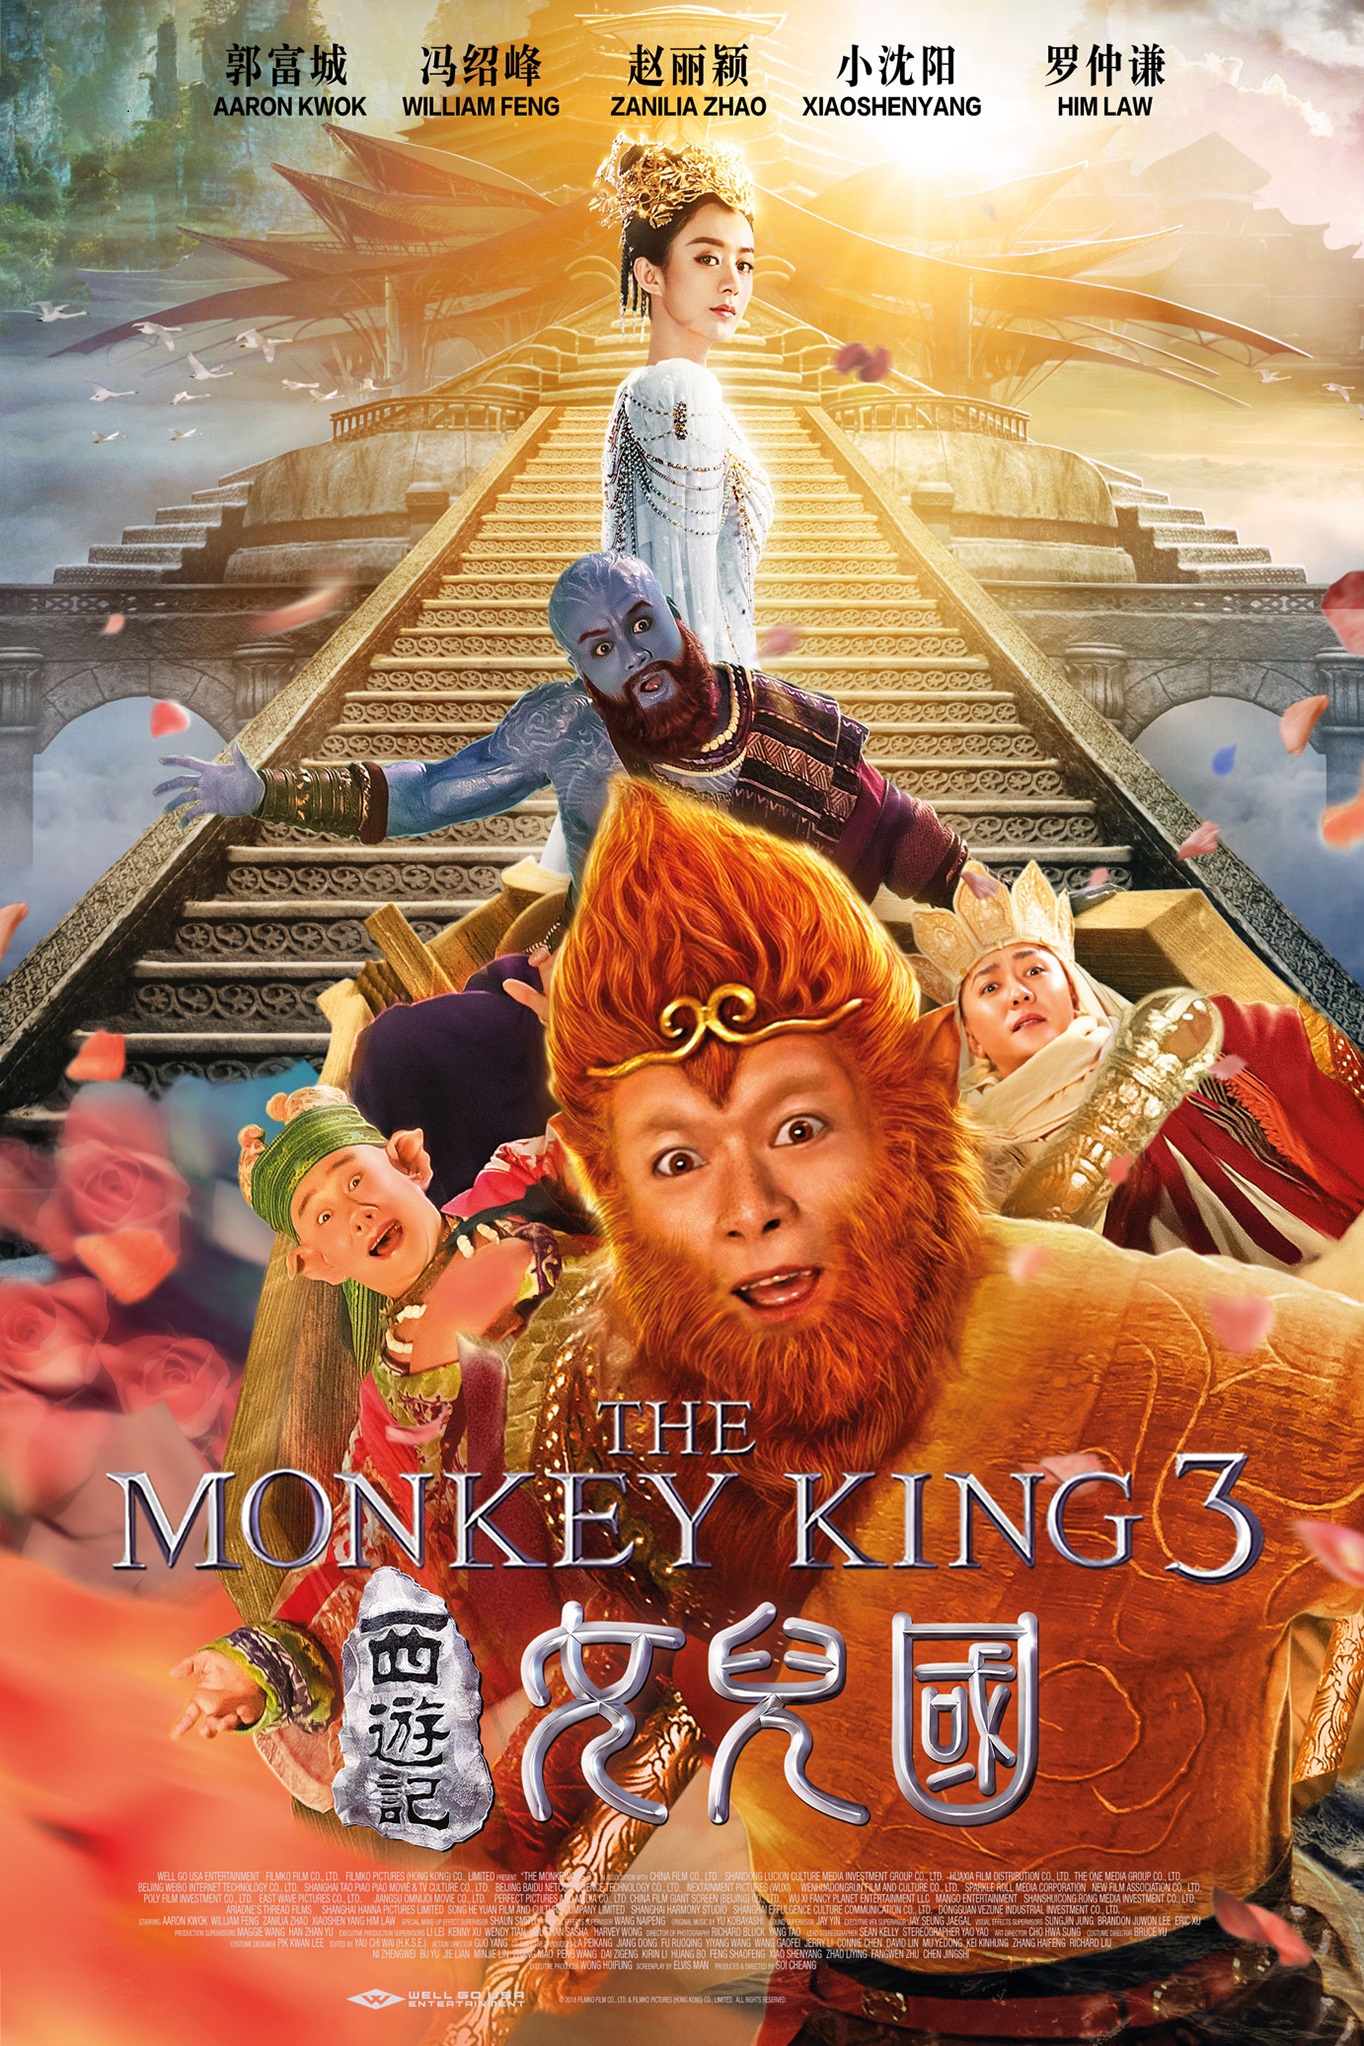 The Monkey King 3 - Kingdom of Women (2018)